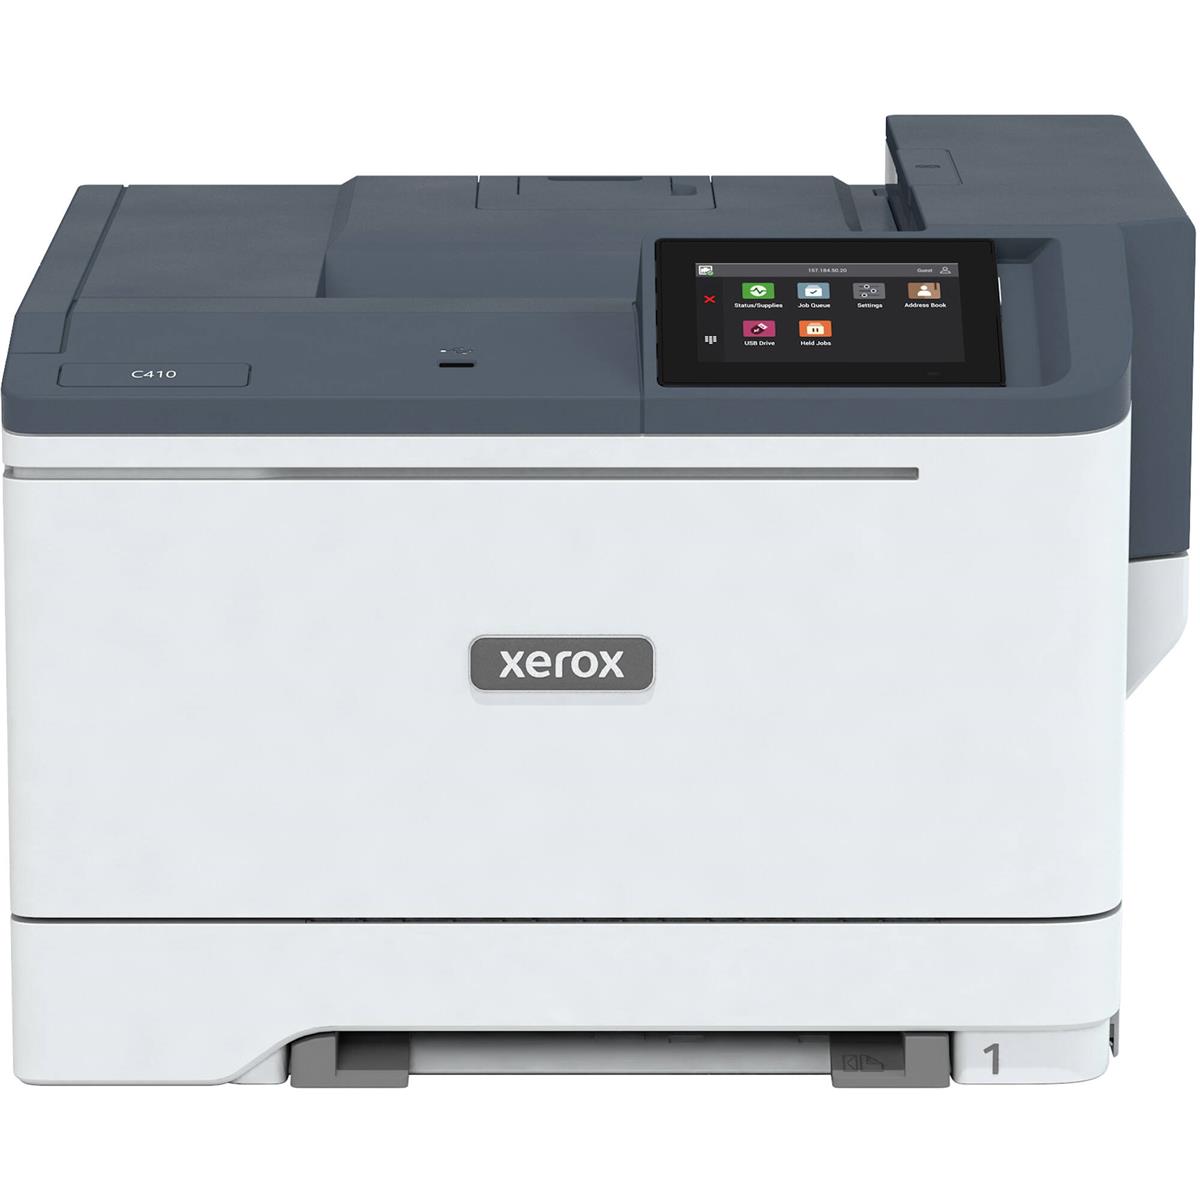 Image of Xerox C410 Duplex Color Laser Printer